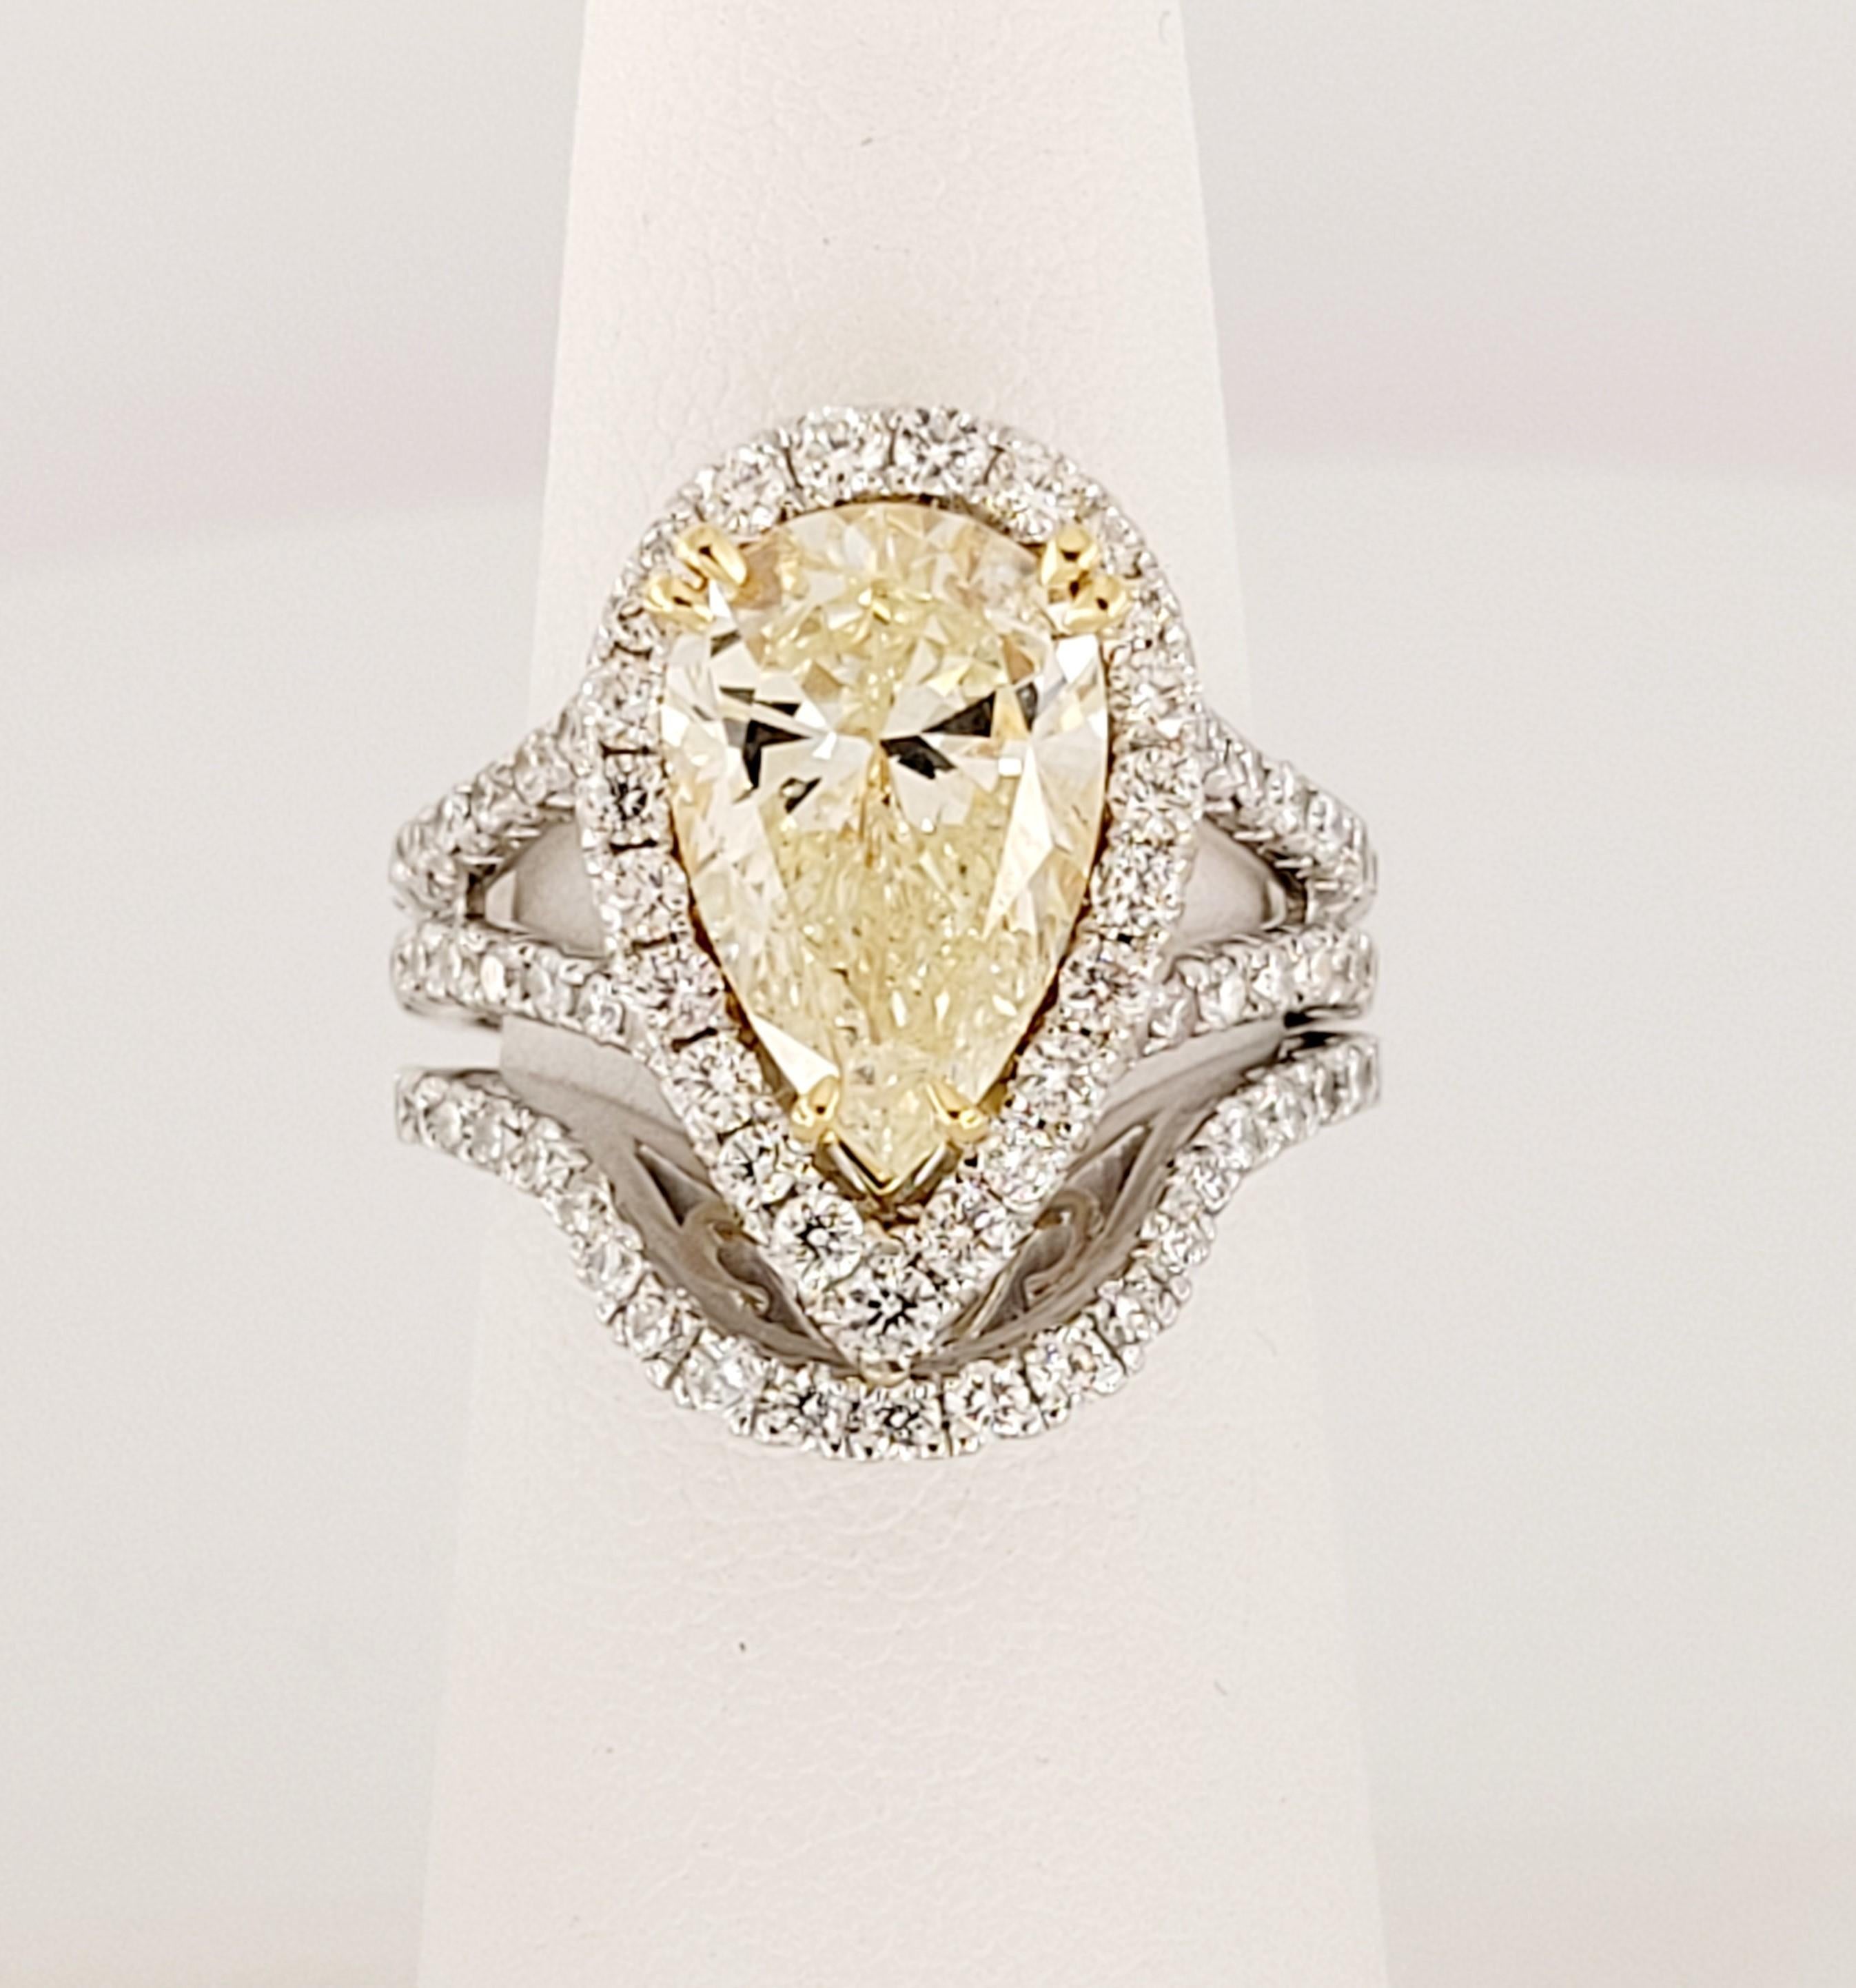 Custom Made Diamond Ring 
Center Stone: 3.37carats
Shape & Cut: Pear Cut
Measurements: 12.85 X 8.34 X 5.16mm
Metal: 18K White Gold 

Polish Good
Symmetry good
Clarity I-1
Color W-X

Side Diamonds: Round Cut Diamonds
Carat: 0.92tcw
Clarity